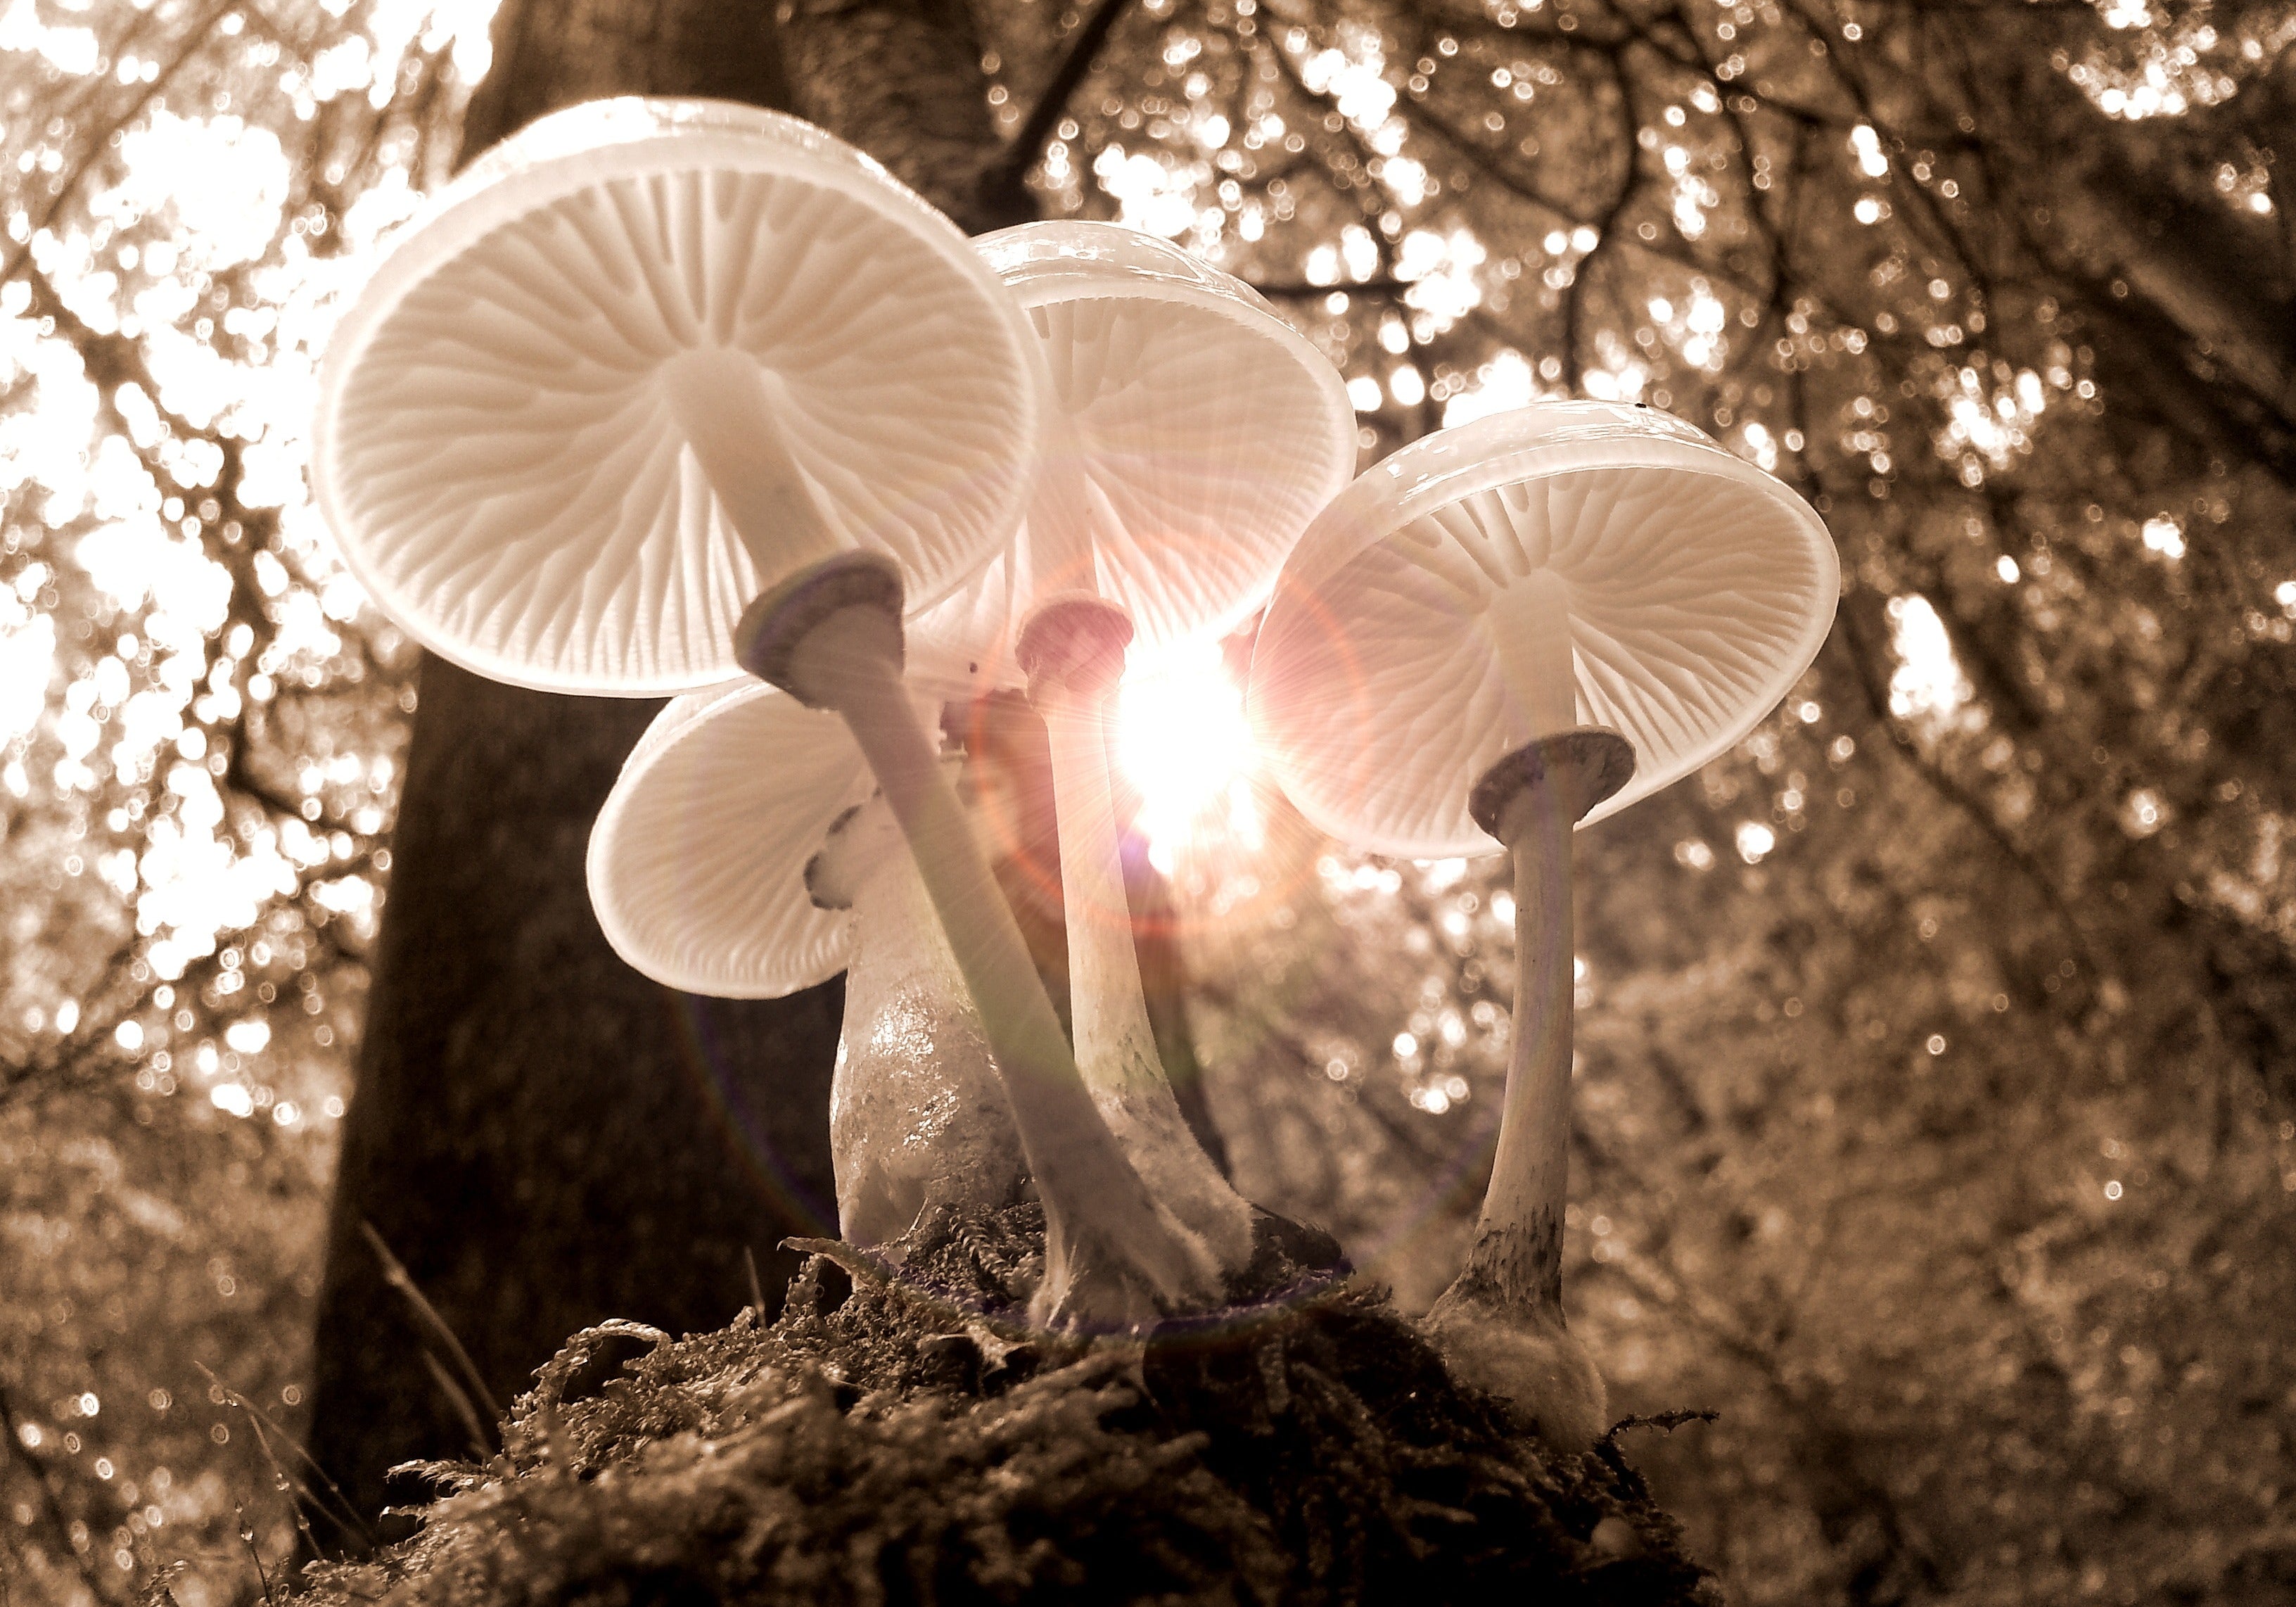 Mushrooms For Stress: Top Mushrooms For Stress and Anxiety